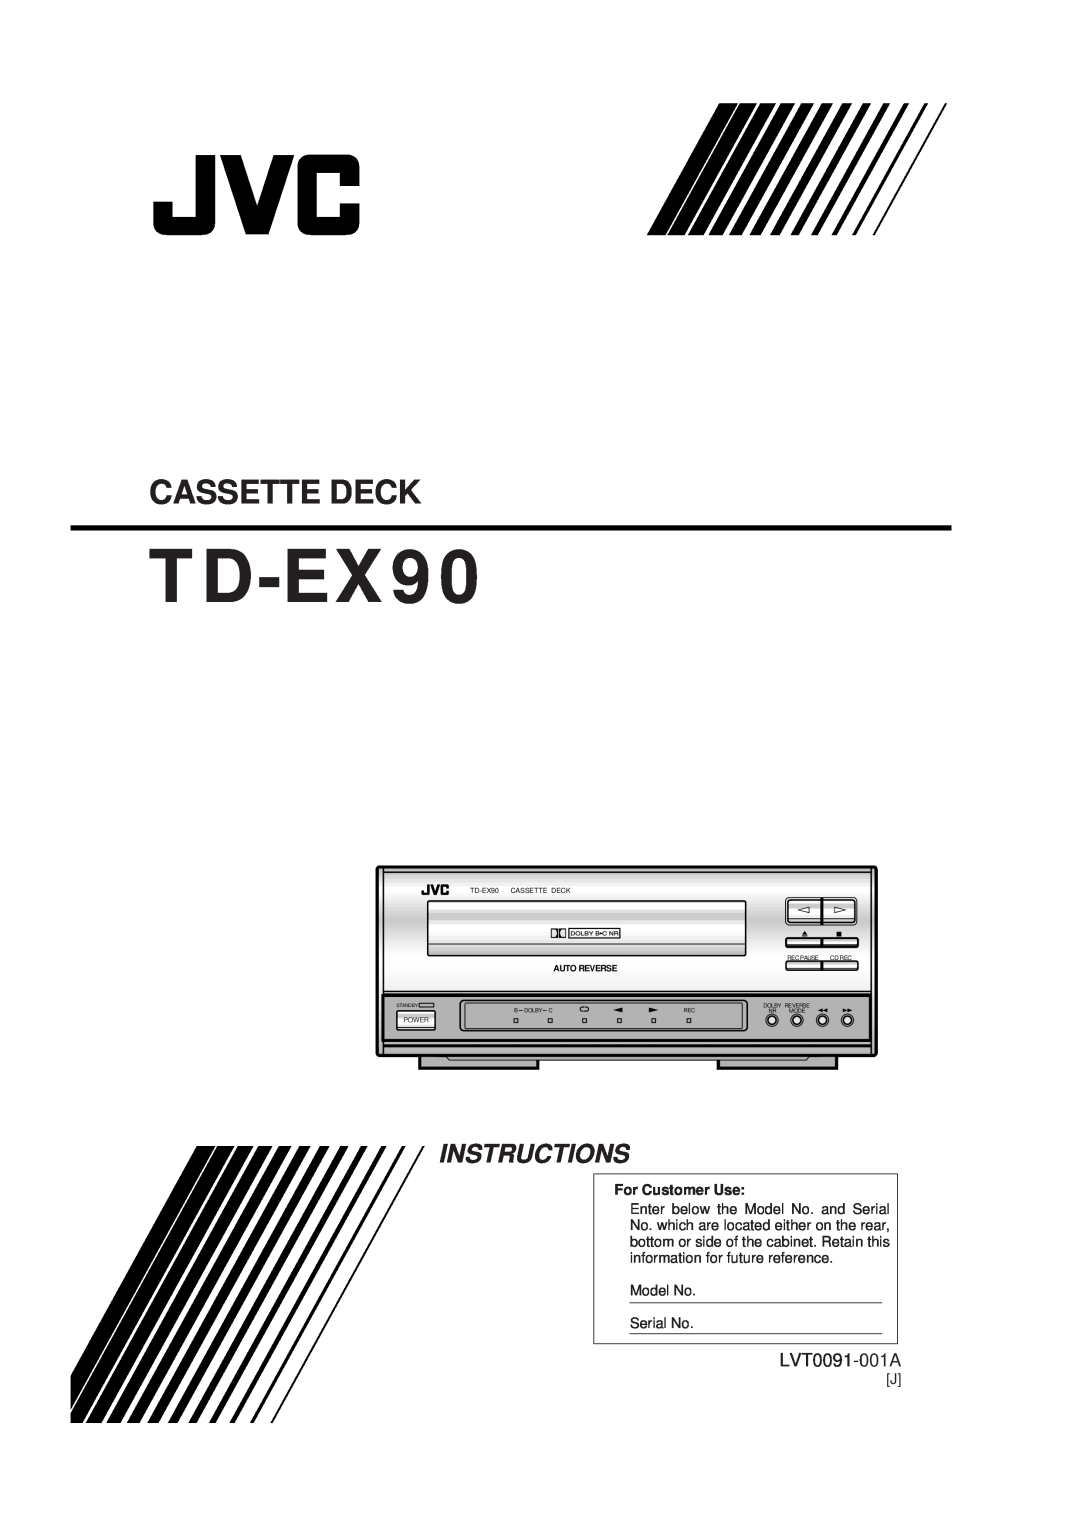 JVC TD-EX90 manual Cassette Deck, Instructions, LVT0091-001A, For Customer Use, Model No Serial No, Auto Reverse, Power 